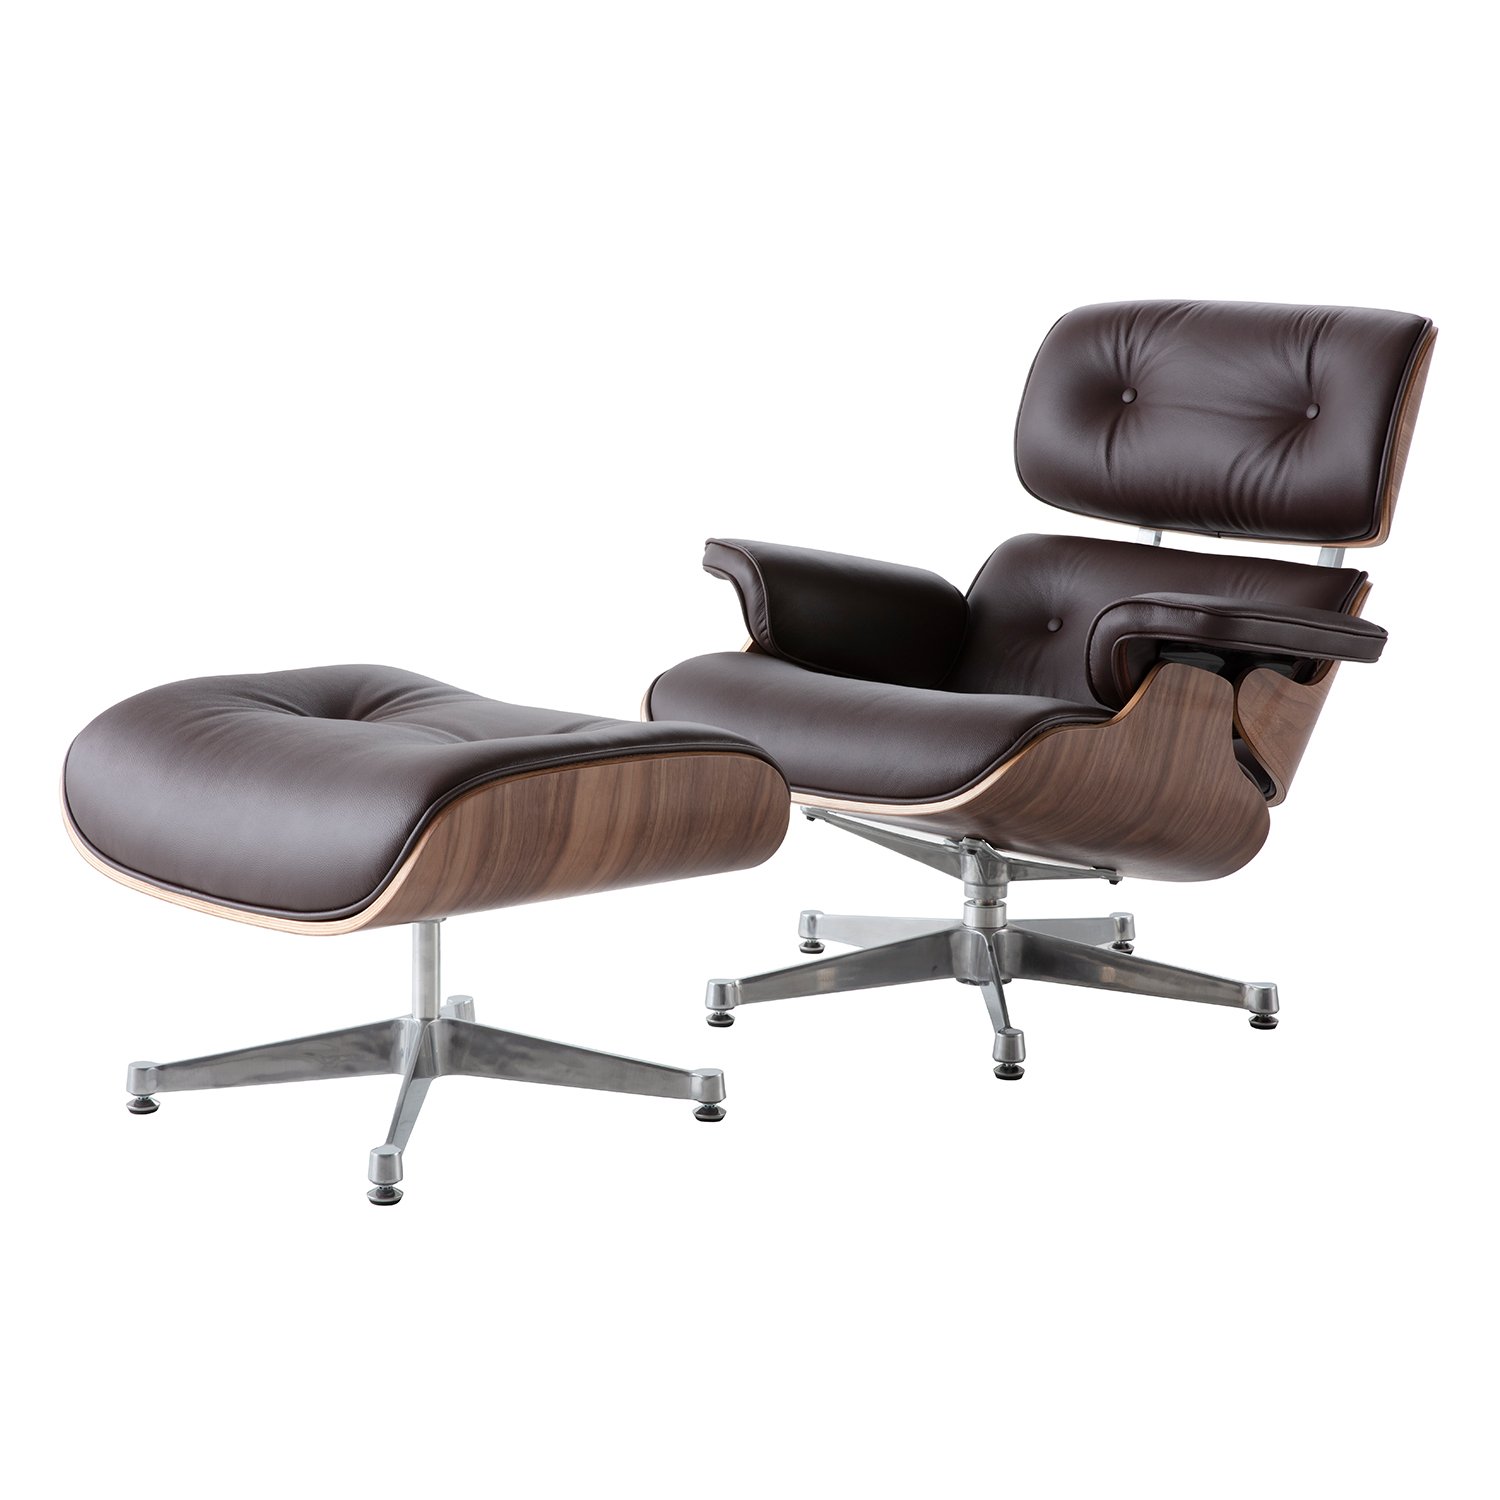 Charles Eames Replica Lounge Chair And Ottoman - Brown - Walnut wood - Chrome Base - DECOMICA